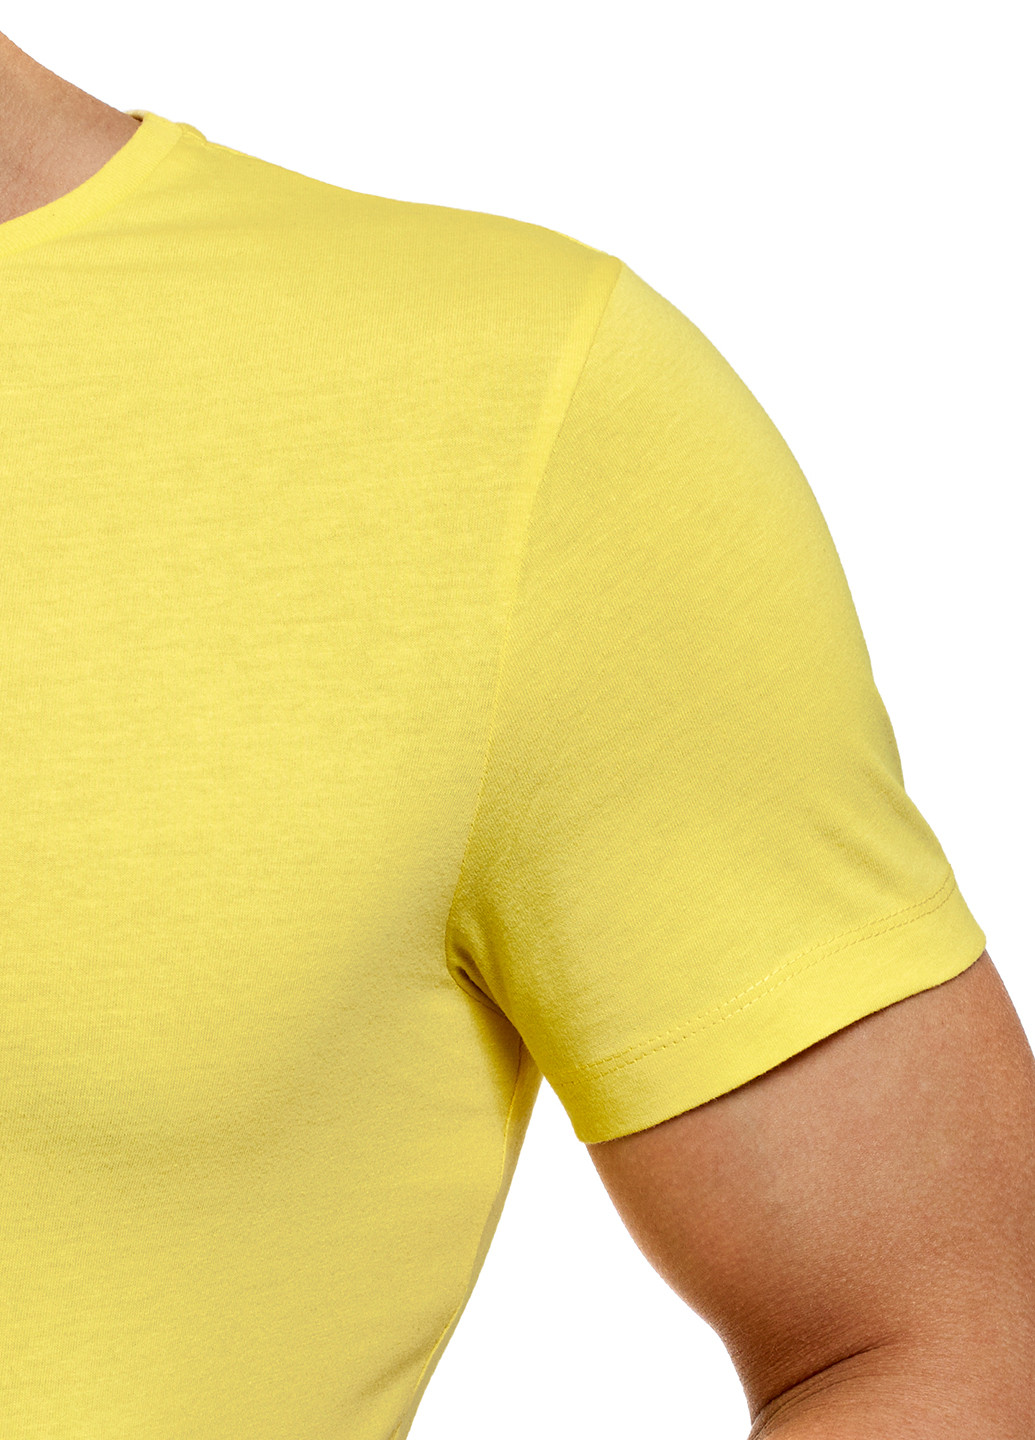 Желтая футболка Oodji